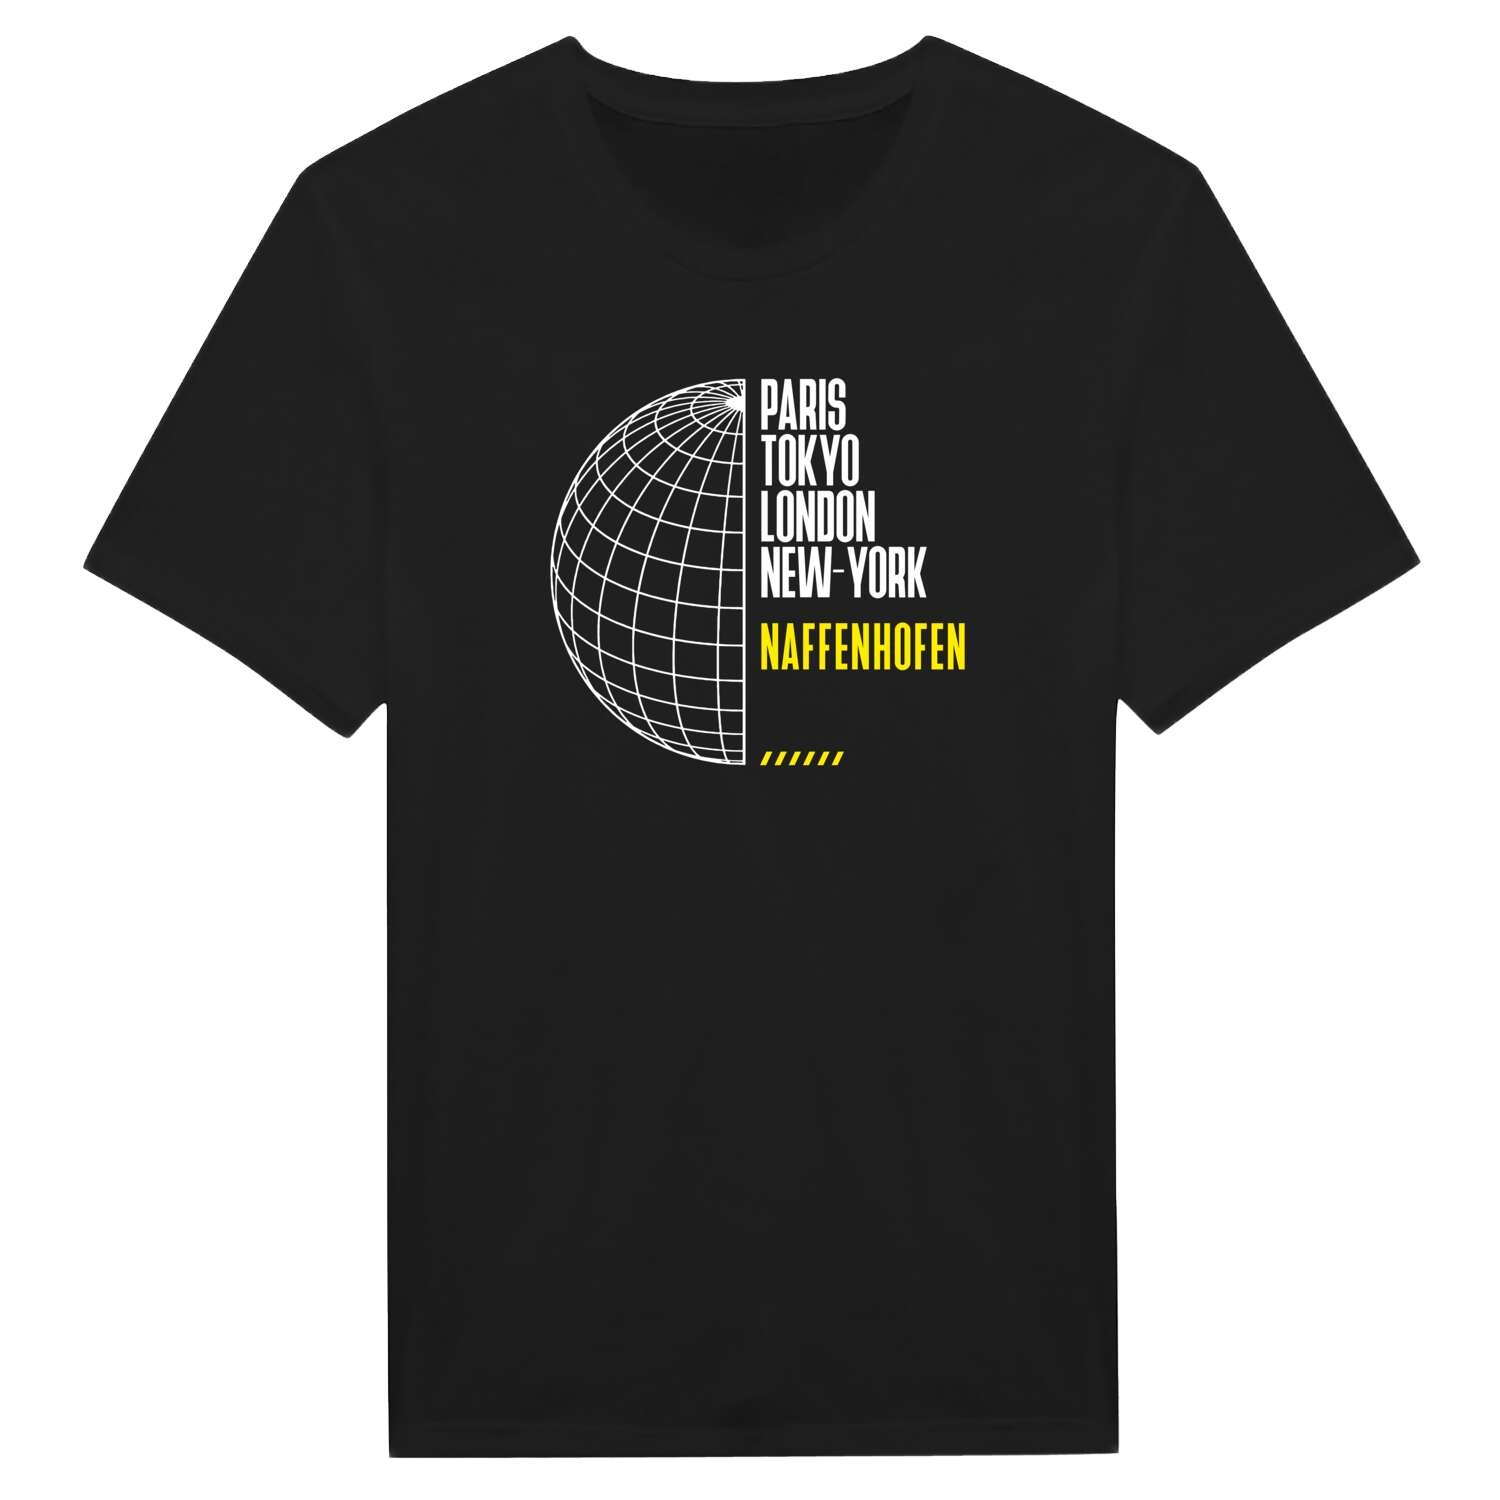 Naffenhofen T-Shirt »Paris Tokyo London«